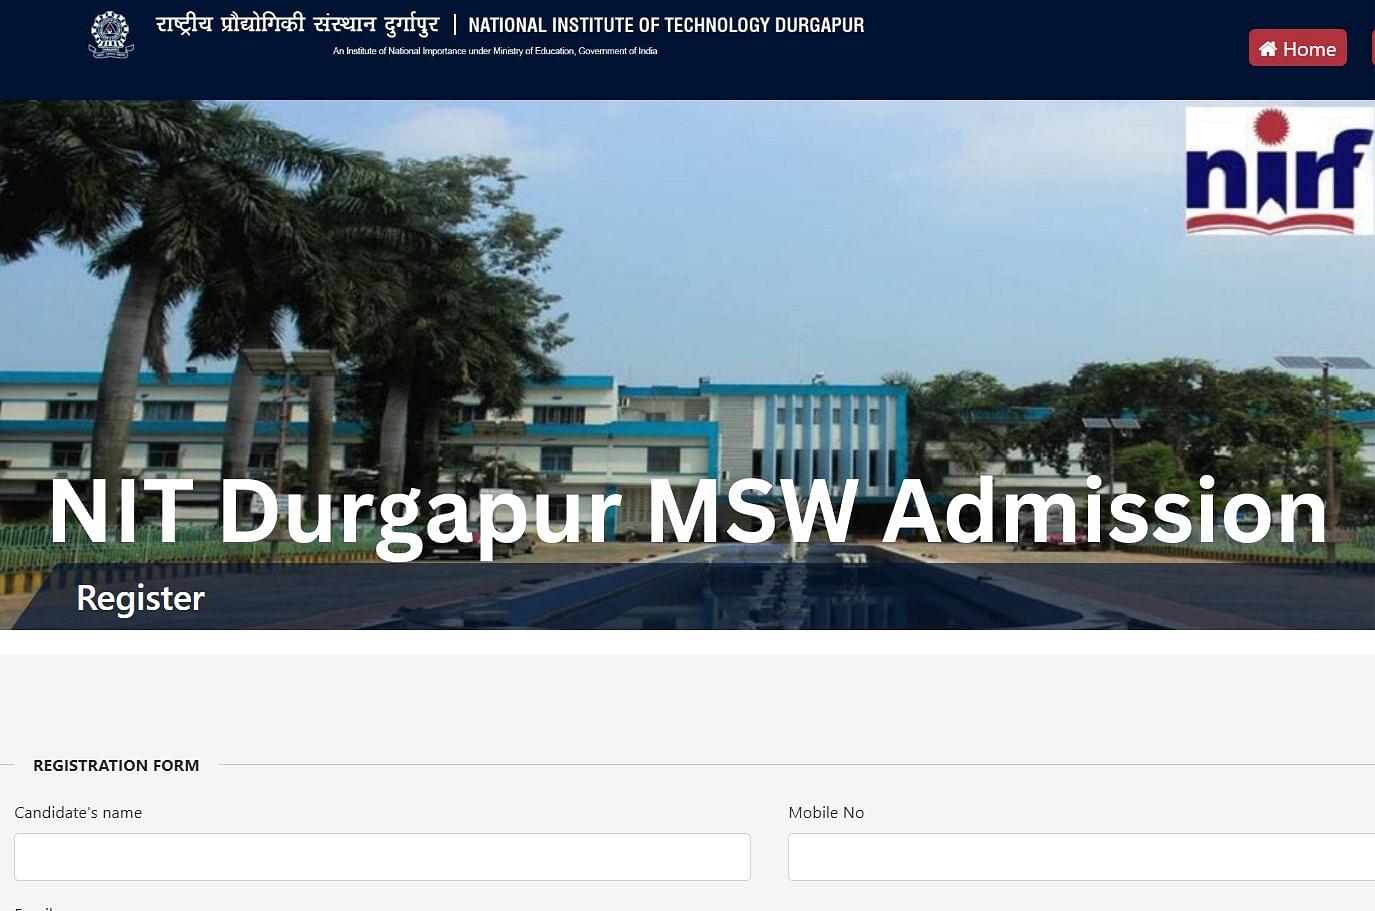 ECE Student's Society, NIT Durgapur | LinkedIn